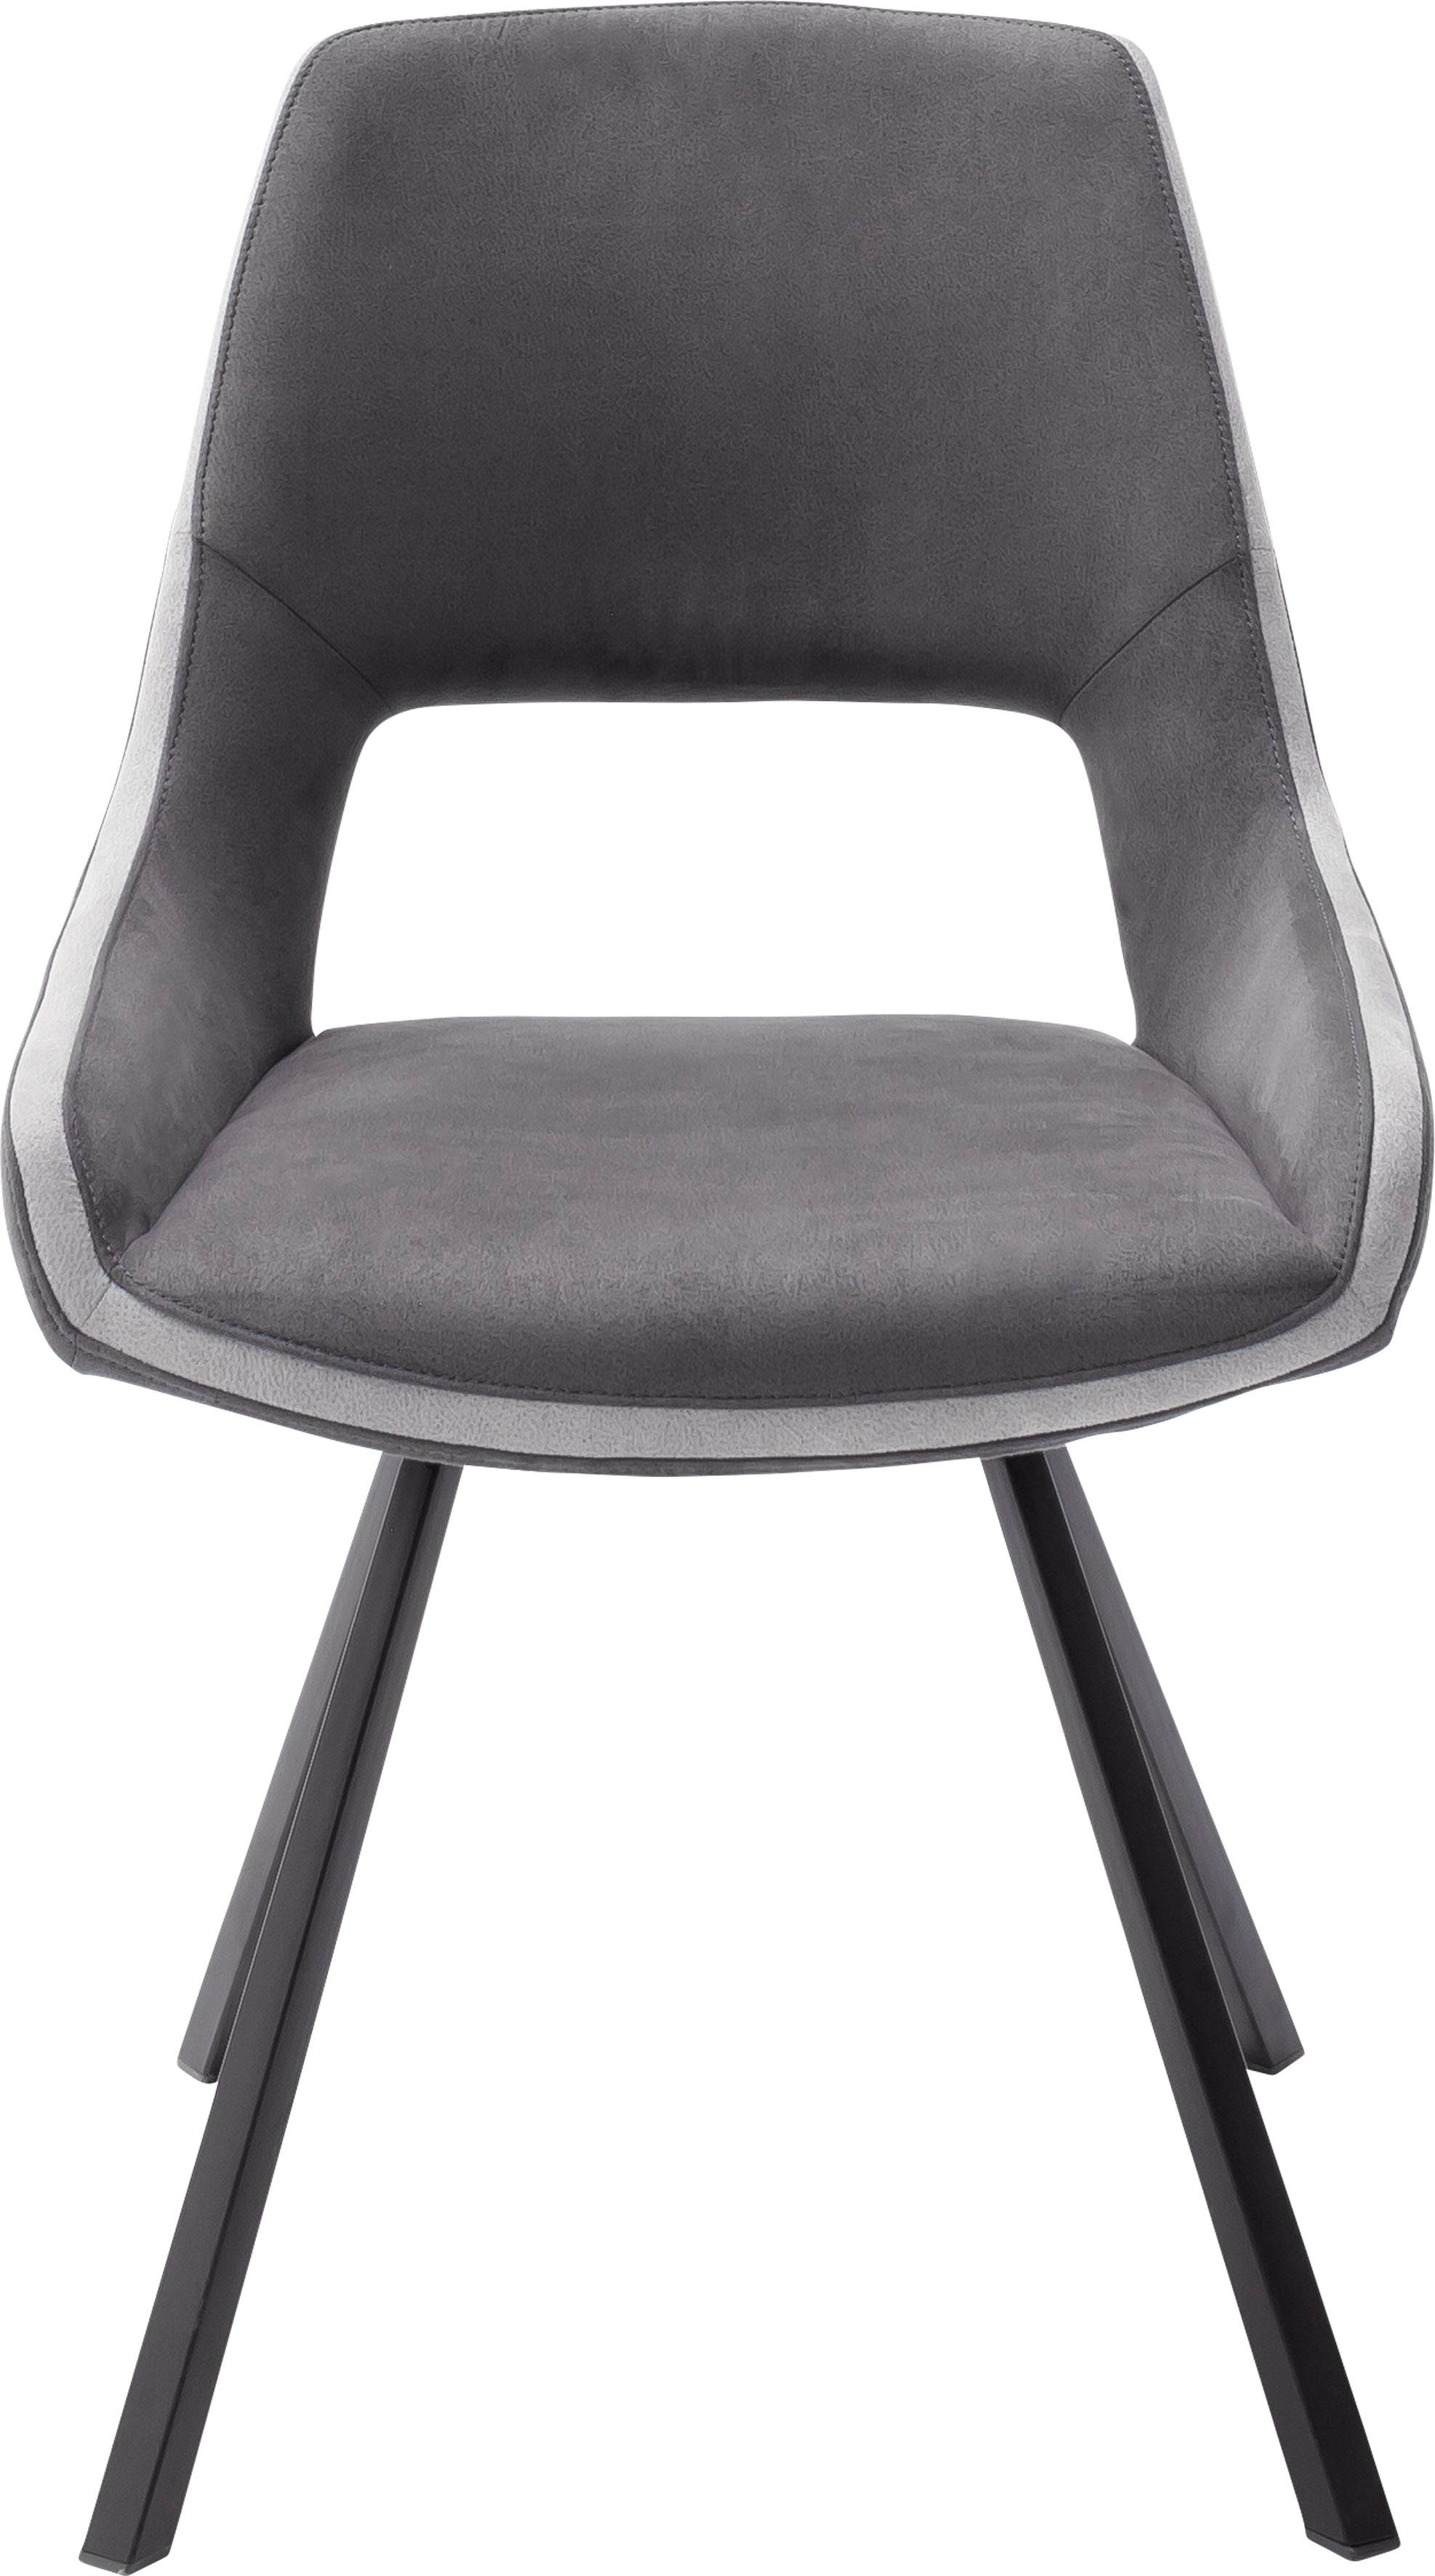 St), belastbar 180°drehbar Dunkelgrau-Grau bis kg Nivellierung, Dunkelgrau MCA Bayonne furniture 2 Stuhl 2-er 120 mit (Set, | Esszimmerstuhl Set,